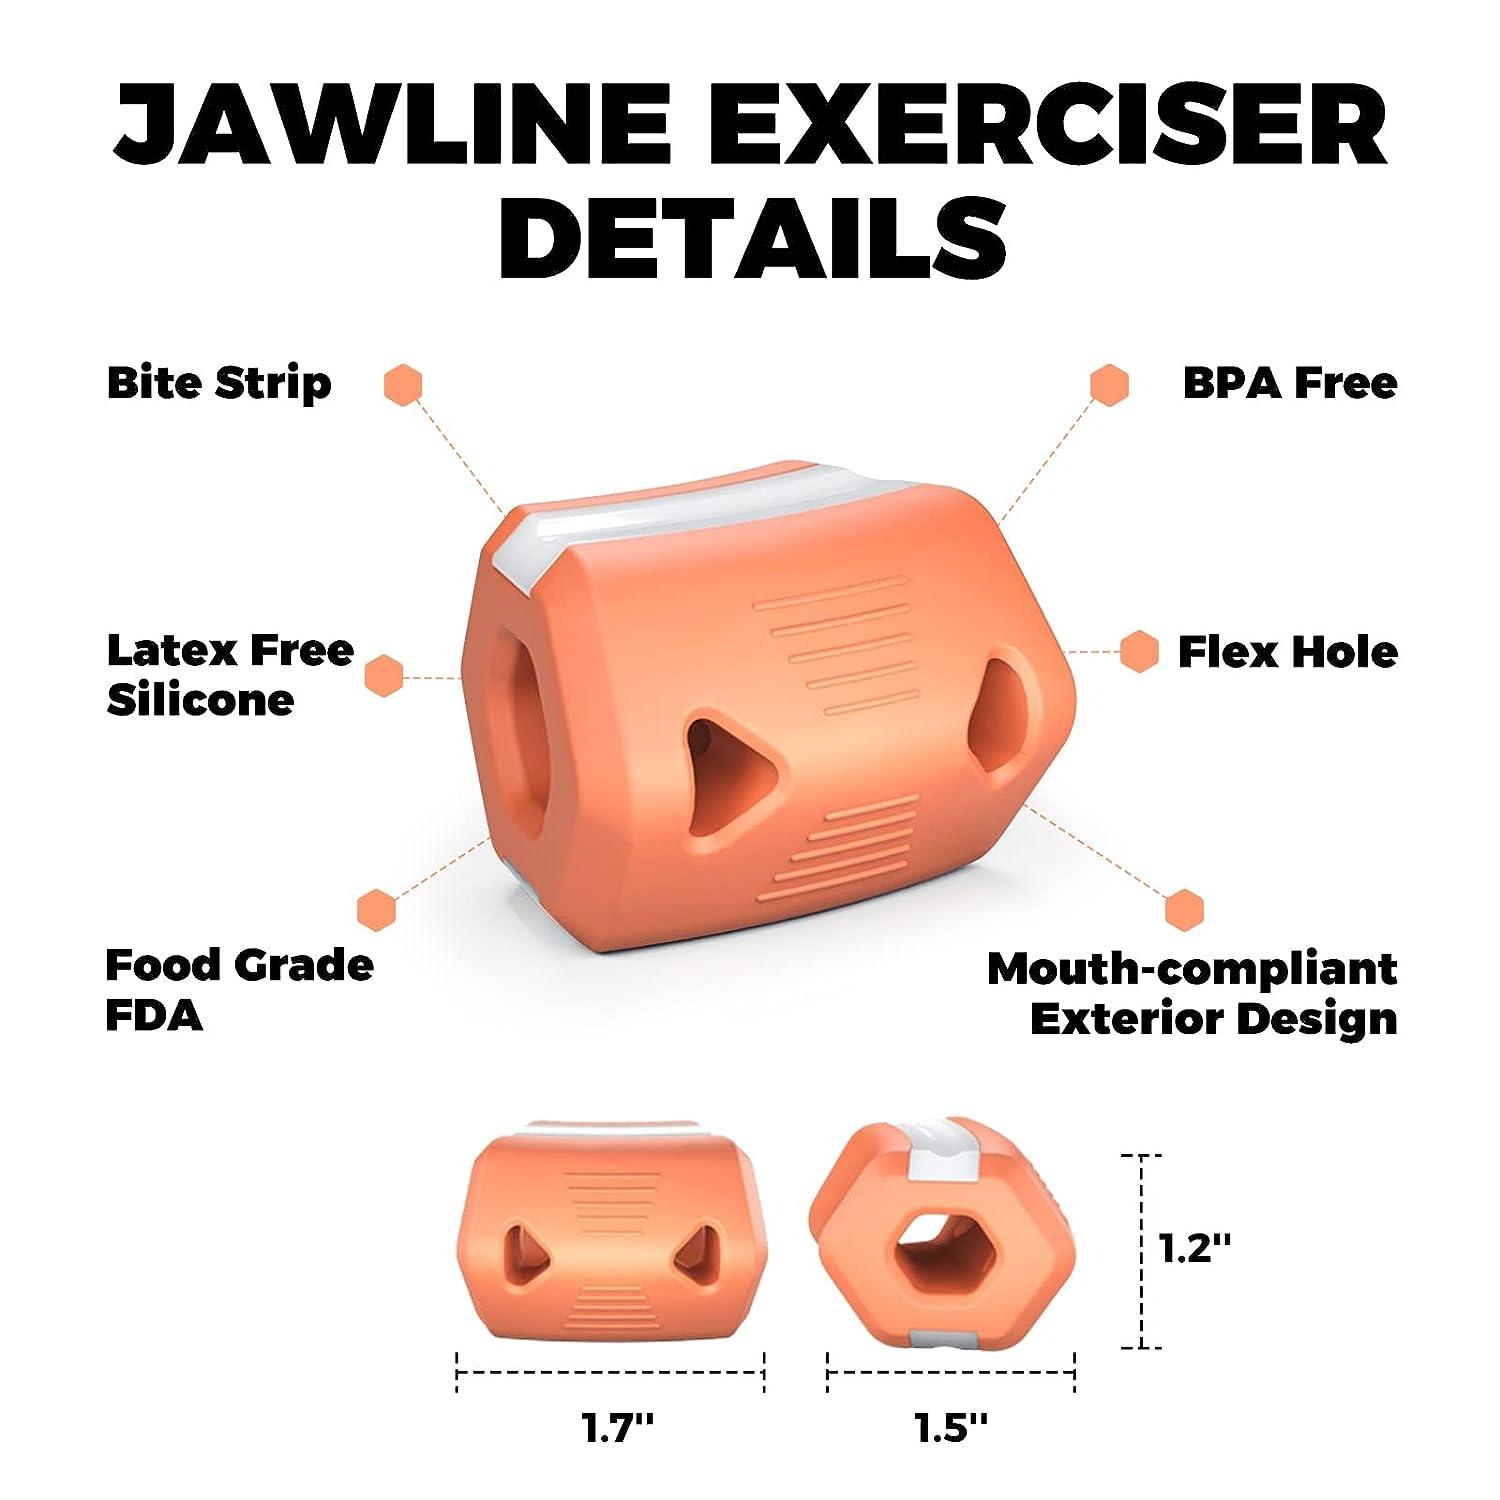 Jawline Exerciser, Food Grade Jaw exerciser for Men and Women